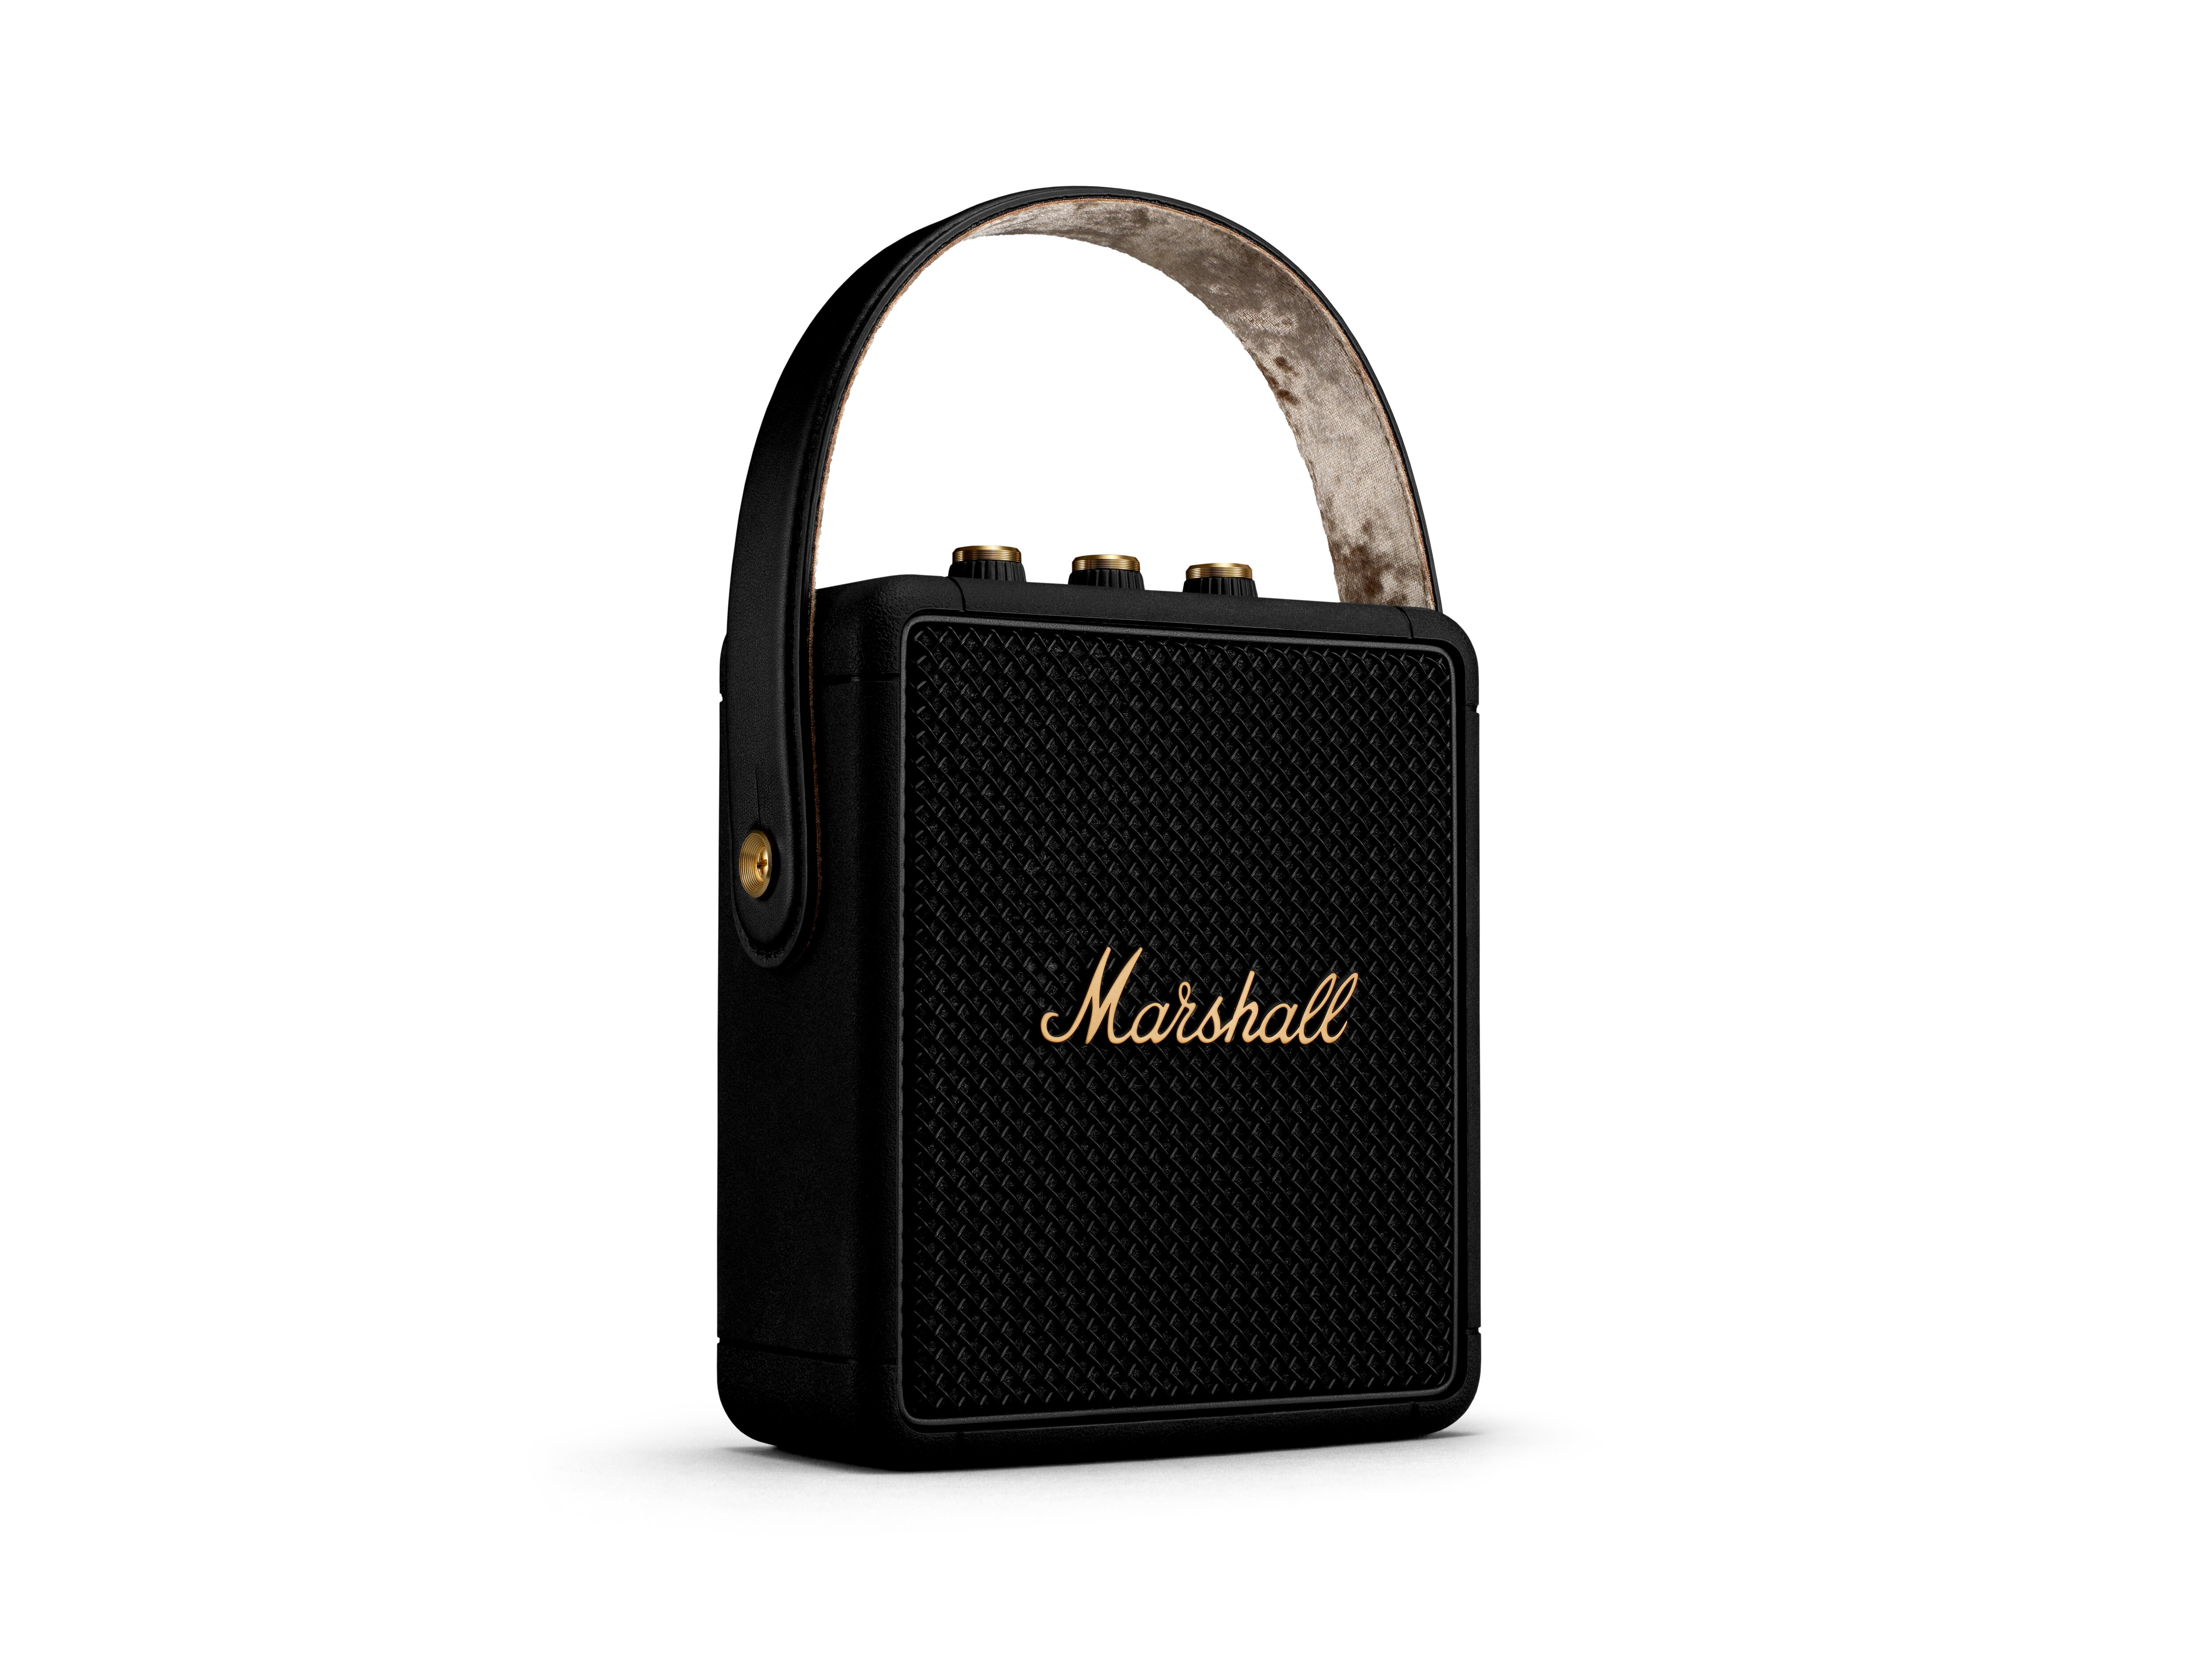 MARSHALL Stockwell Lautsprecher, Brass, Black Wasserfest and II Bluetooth